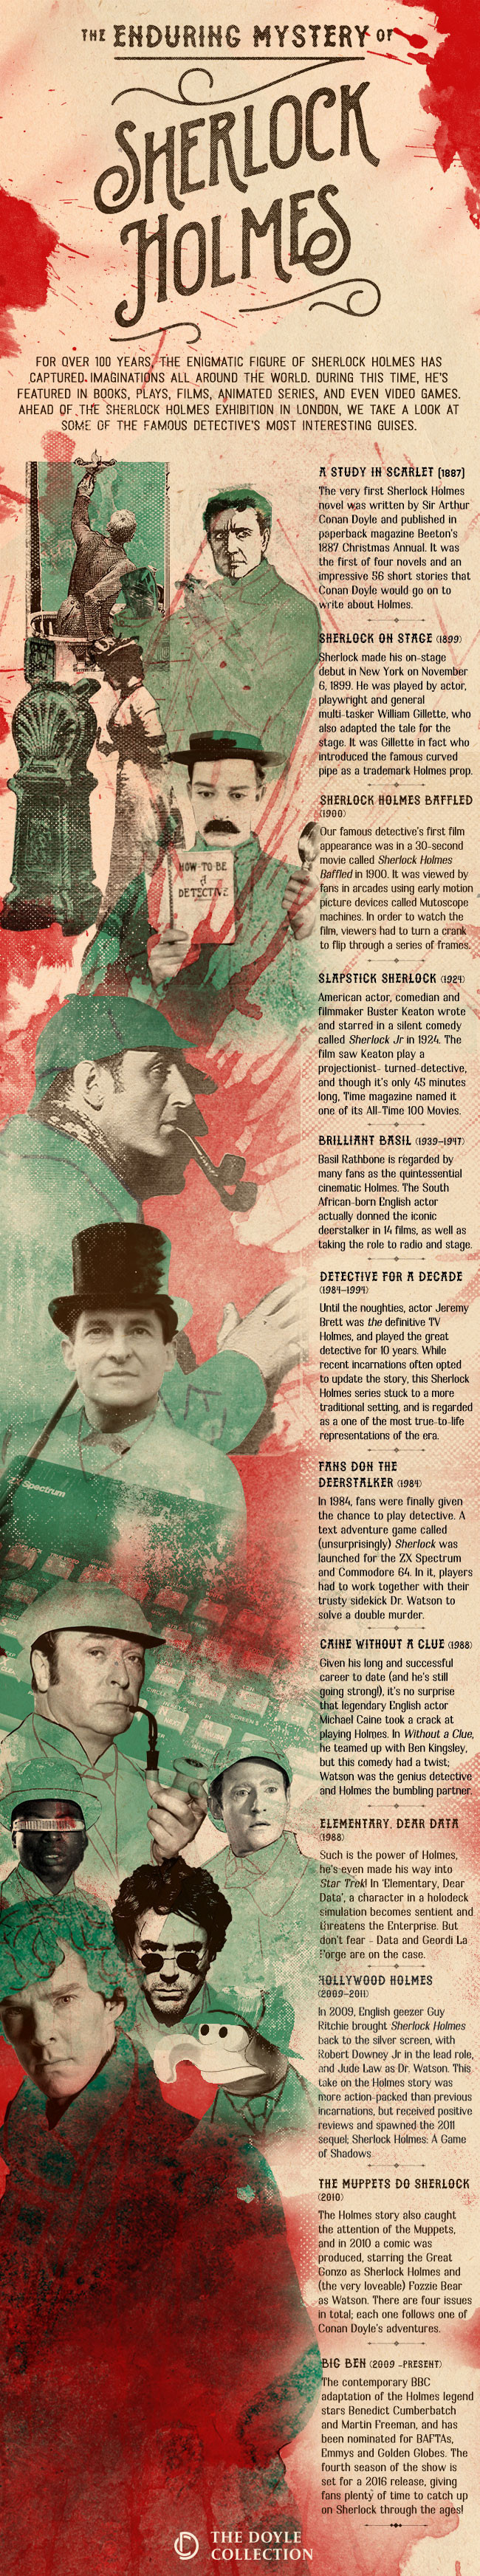 Sherlock Holmes Infographic